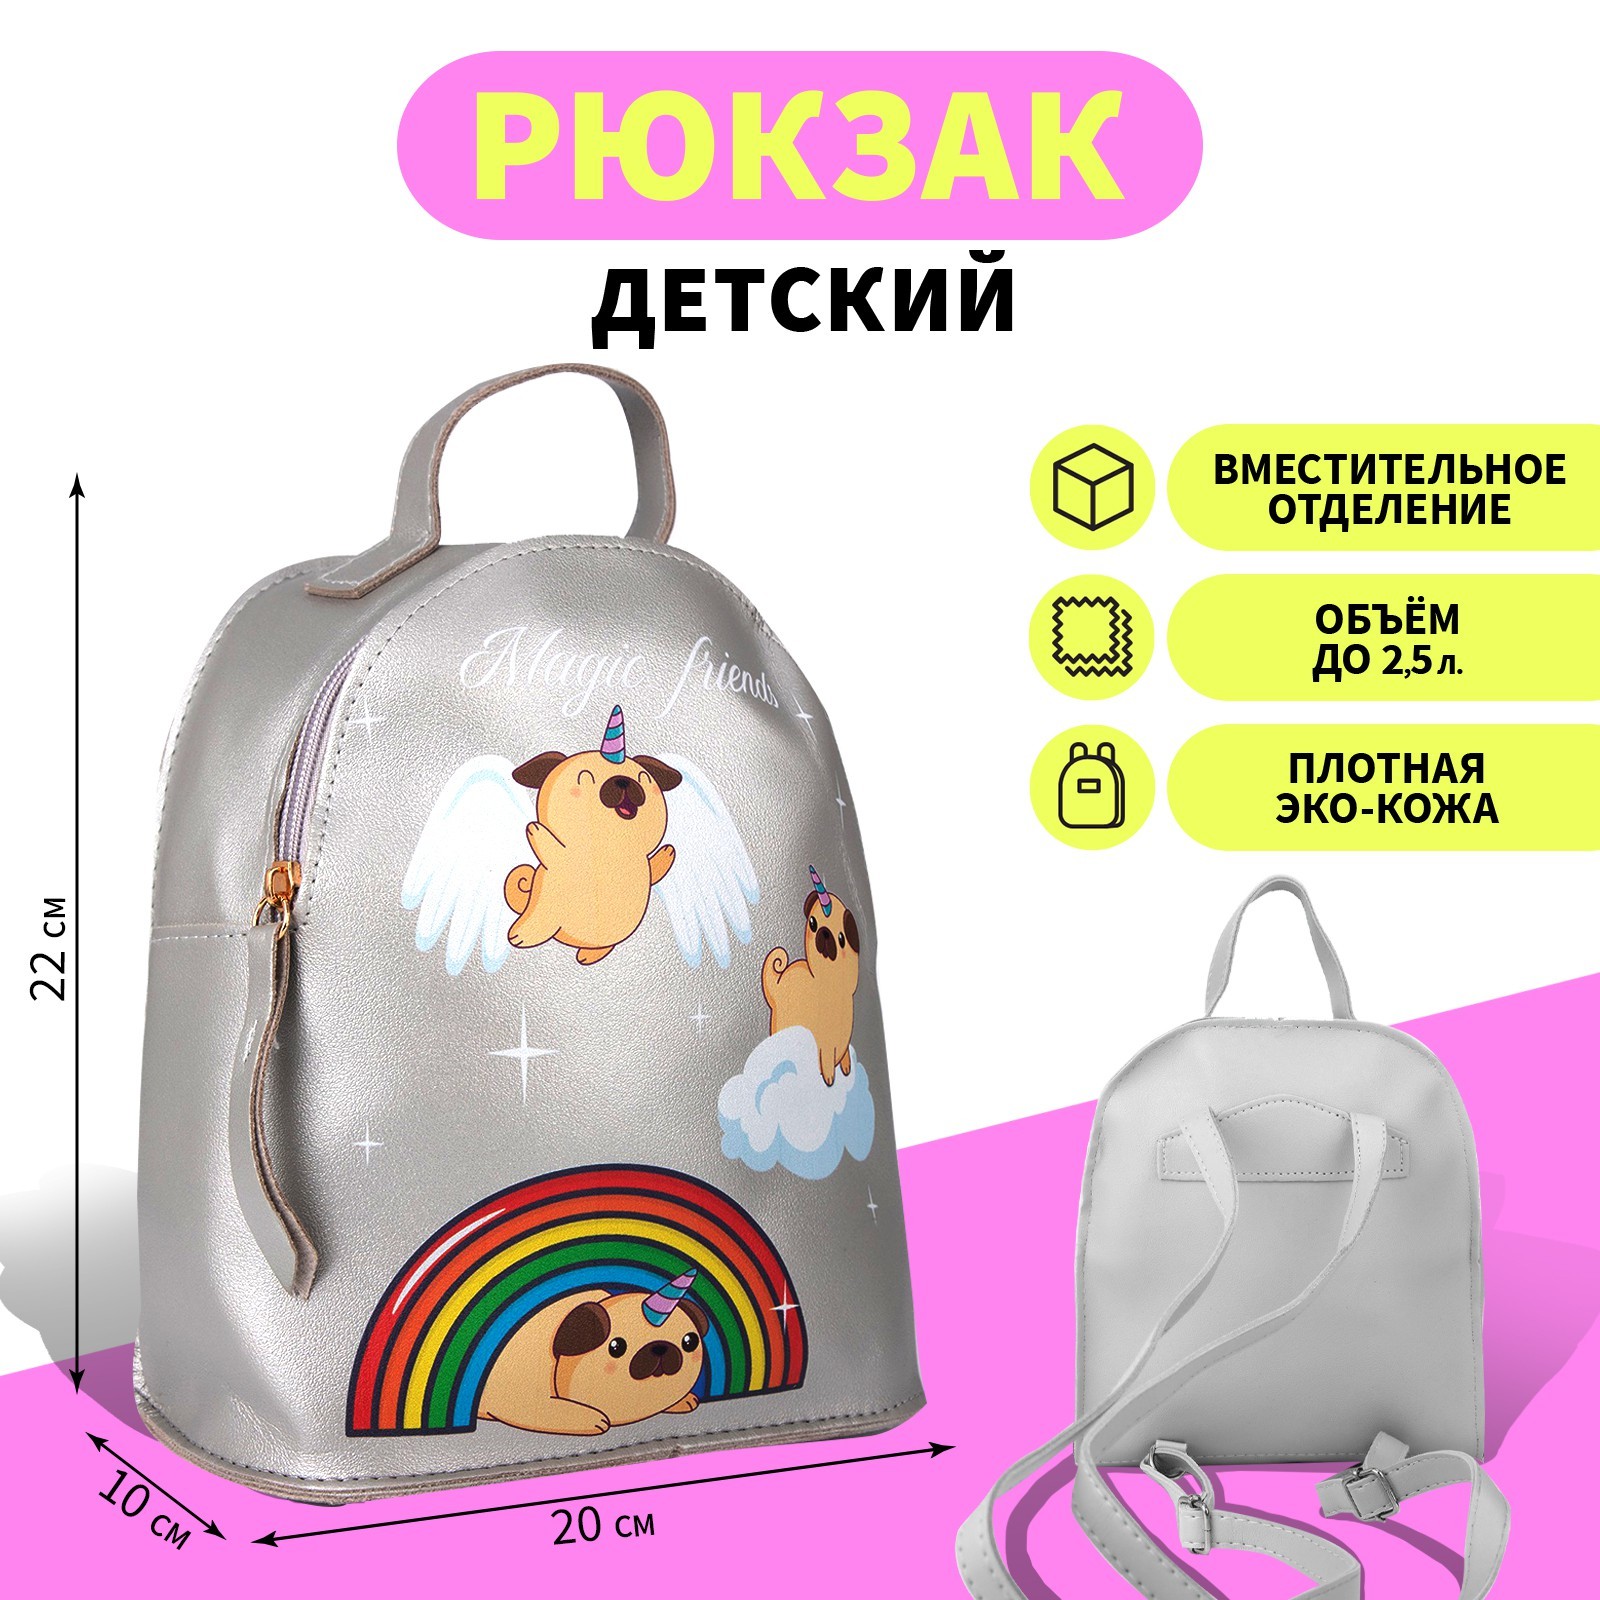 Рюкзак детский 7128233 Мопсики - Нижнекамск 